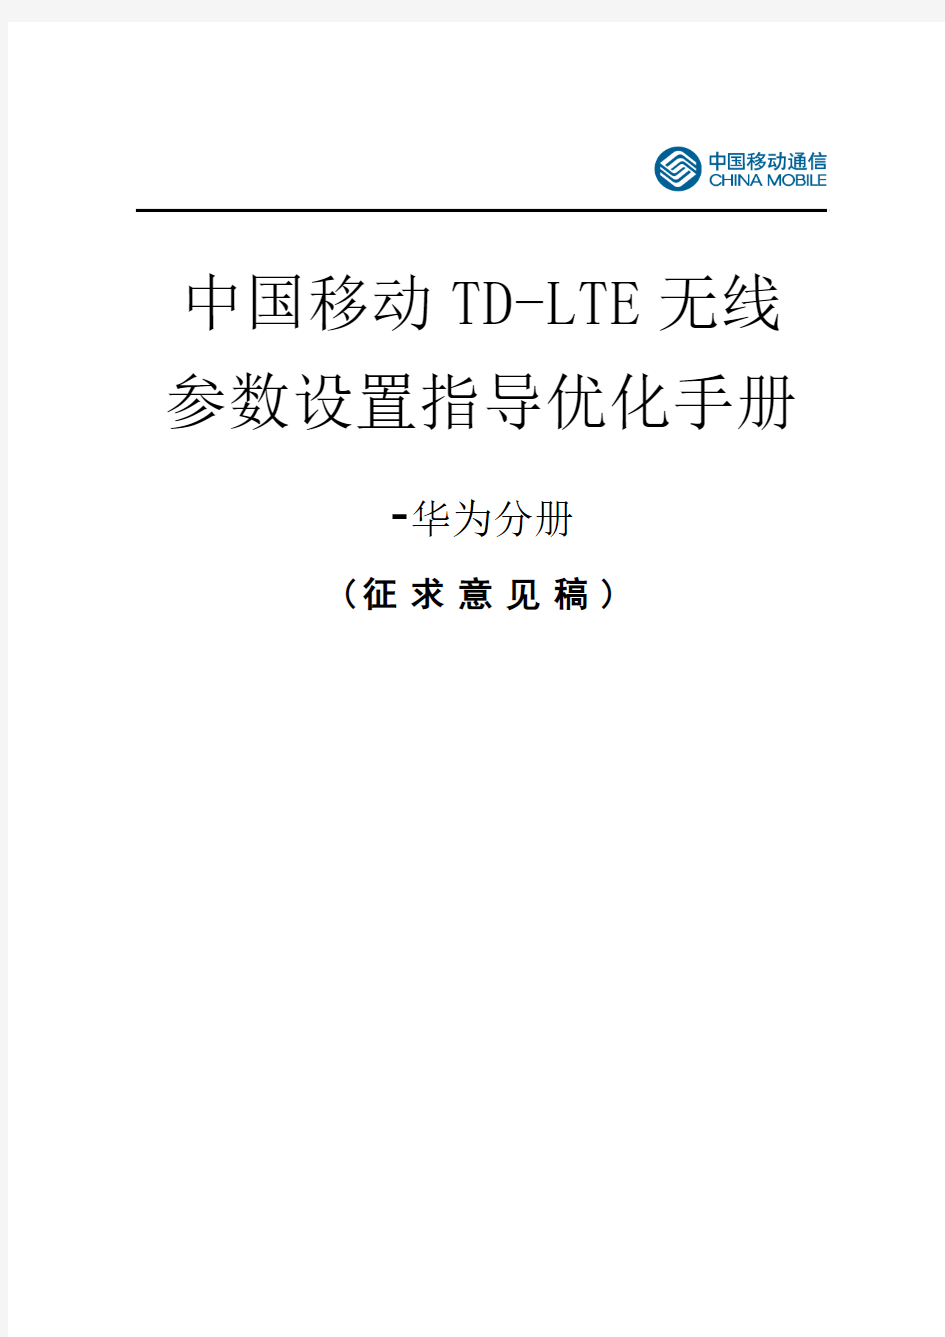 TD-LTE无线参数设置指导优化手册-华为